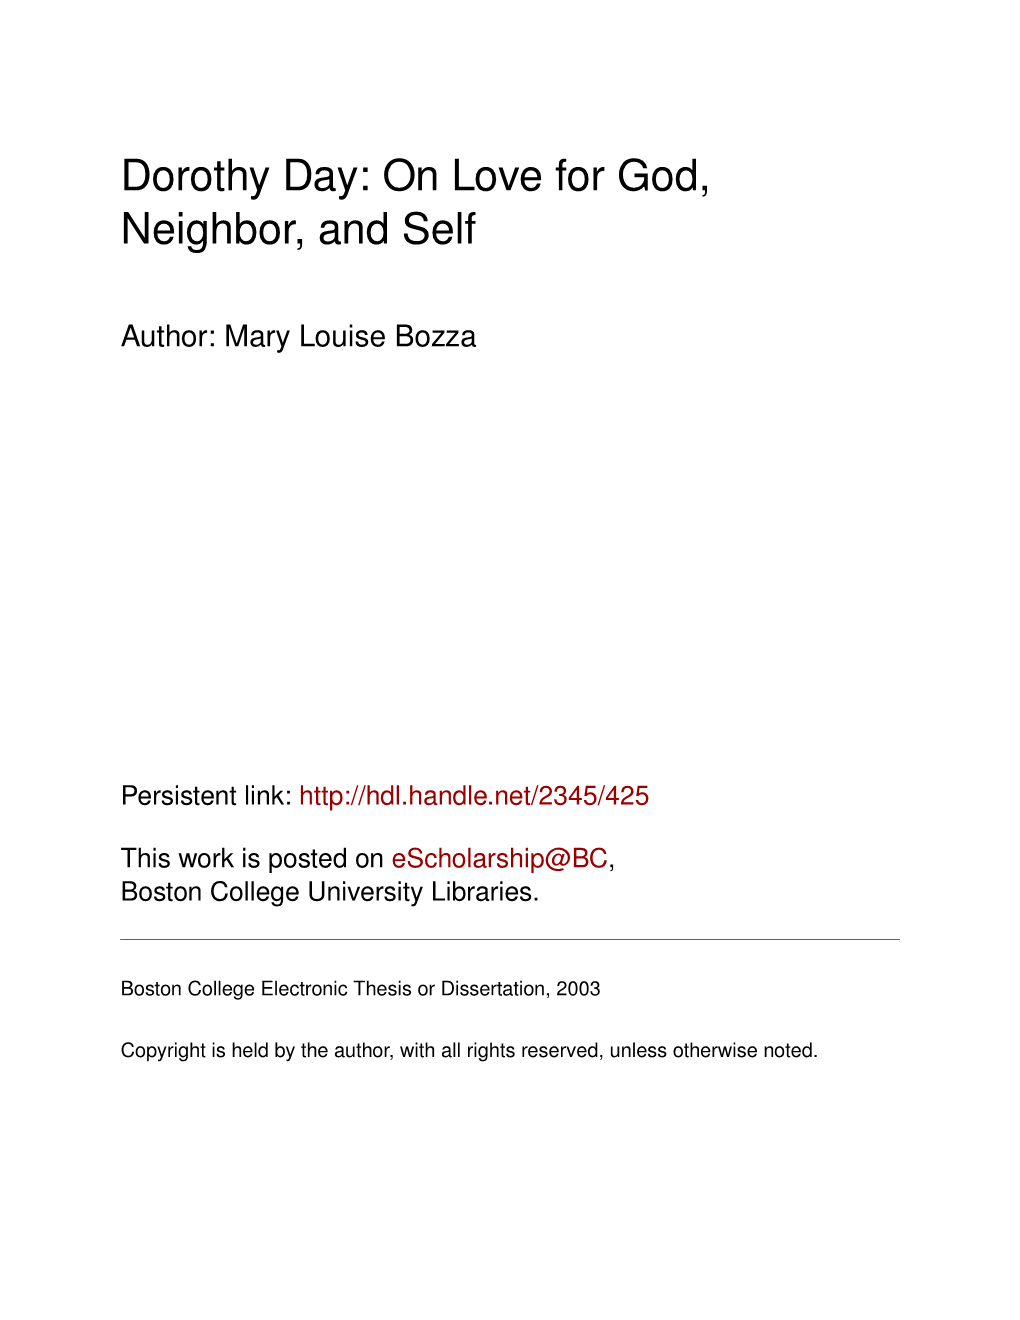 Dorothy Day: on Love for God, Neighbor, and Self